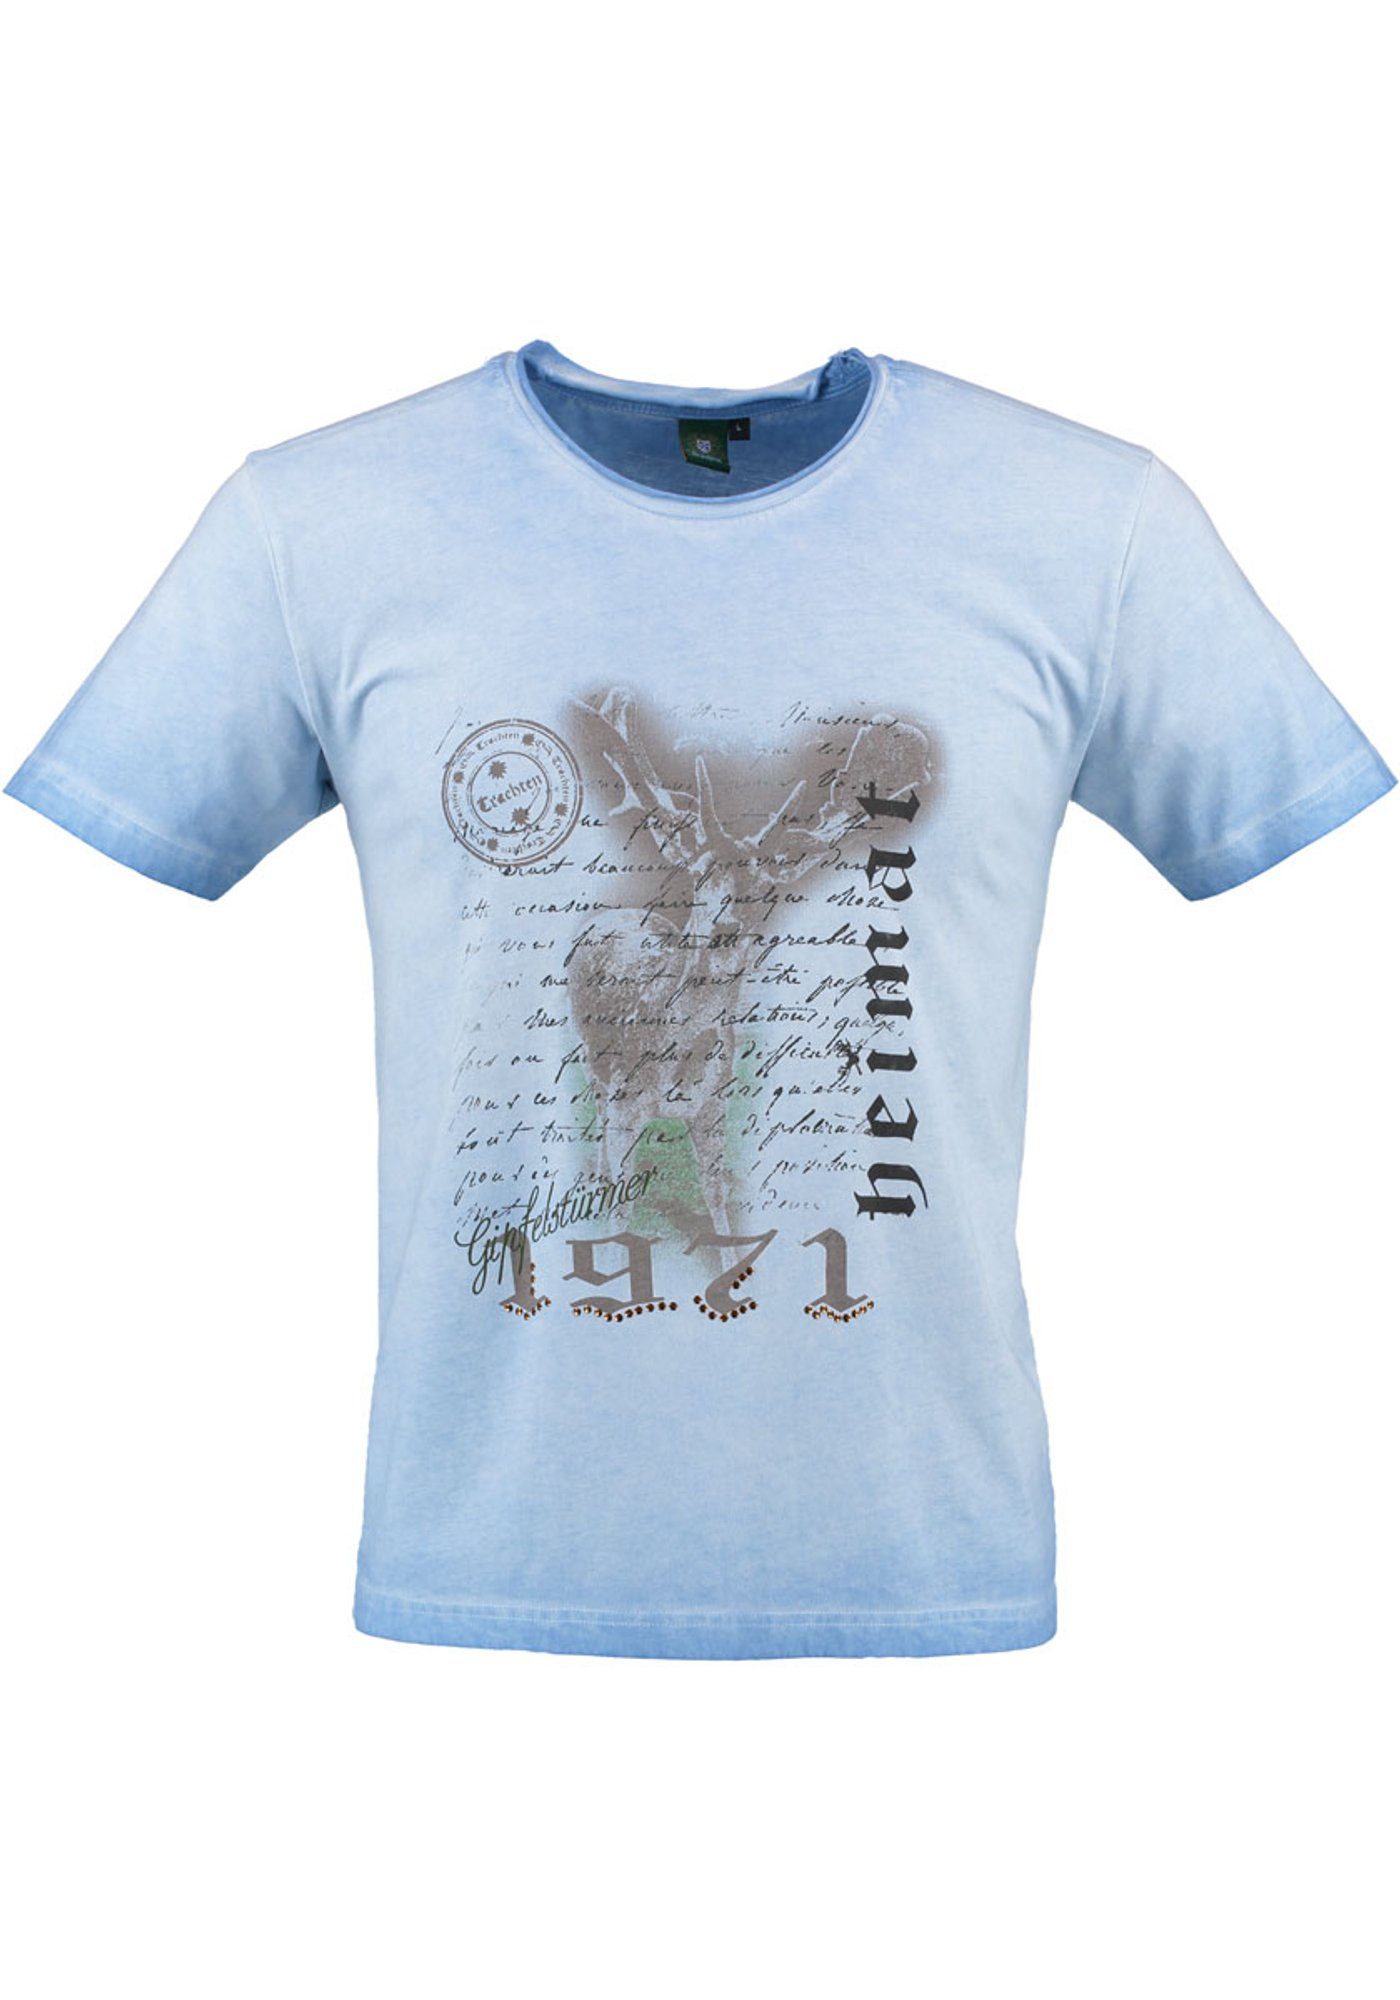 kornblau Kurzarm Motivdruck OS-Trachten Ofapuo Trachtenshirt mit T-Shirt